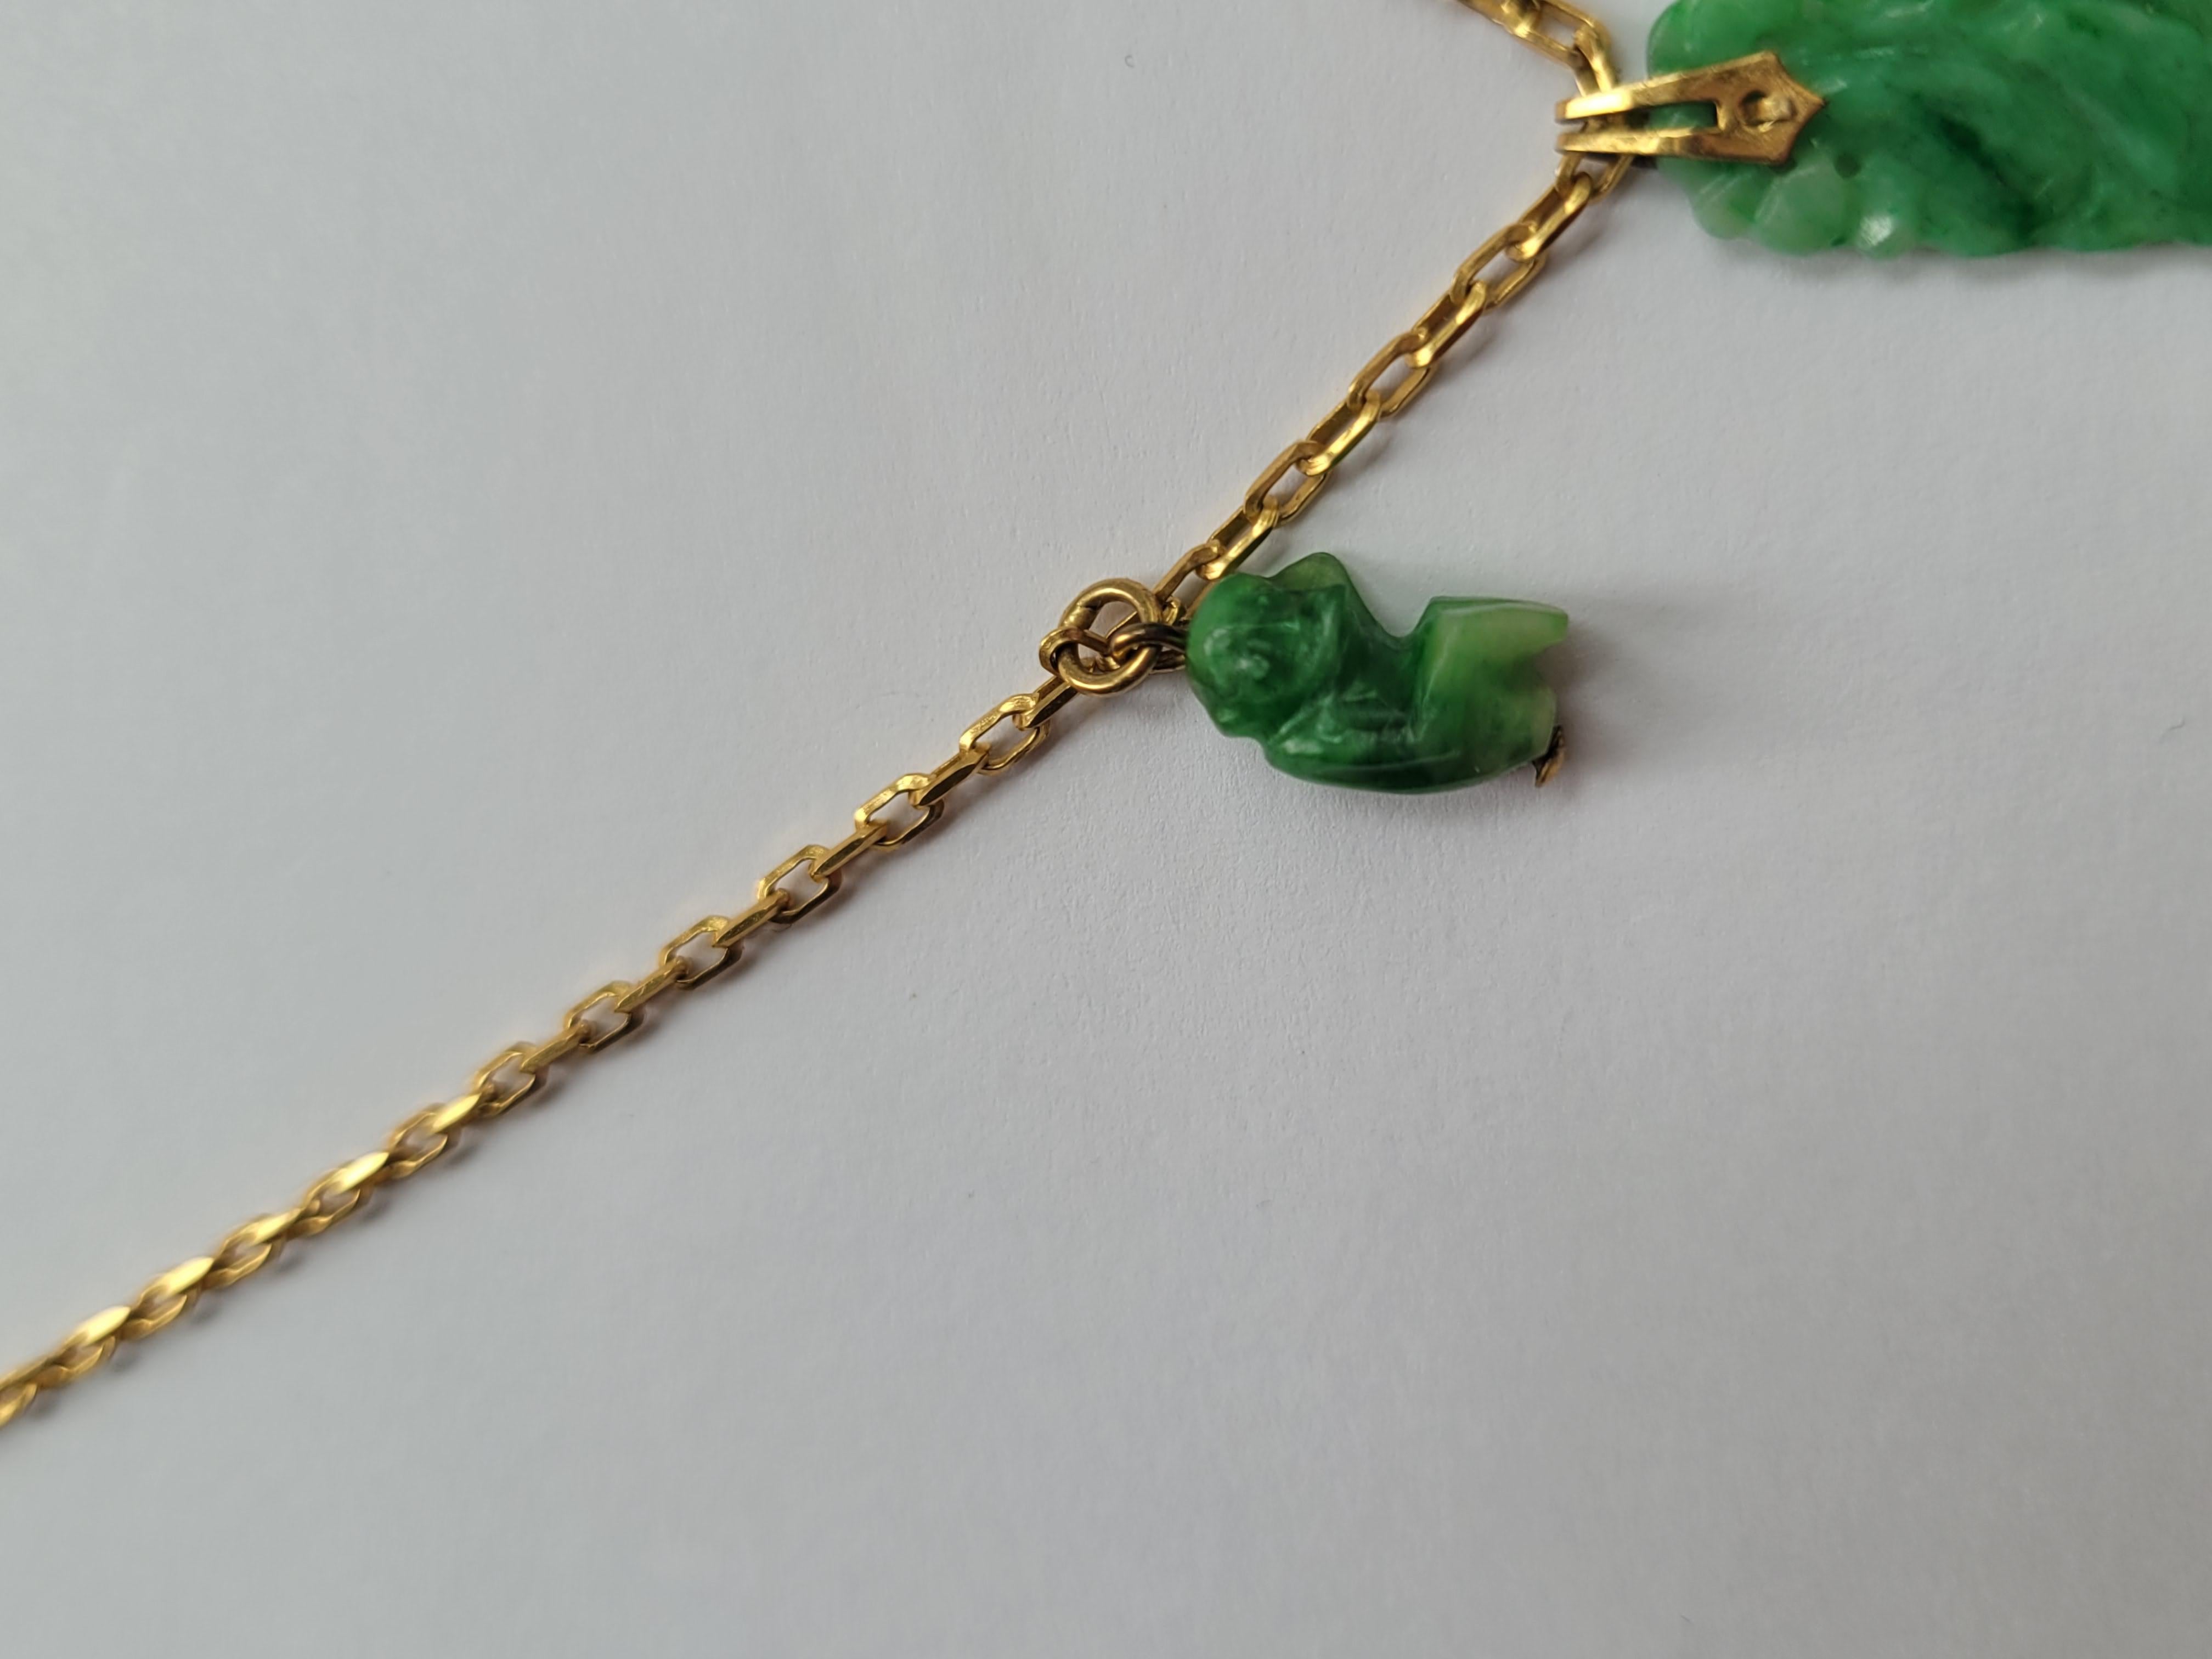 Unusual Vintage Carved Jade Monkey pendant necklace For Sale 2